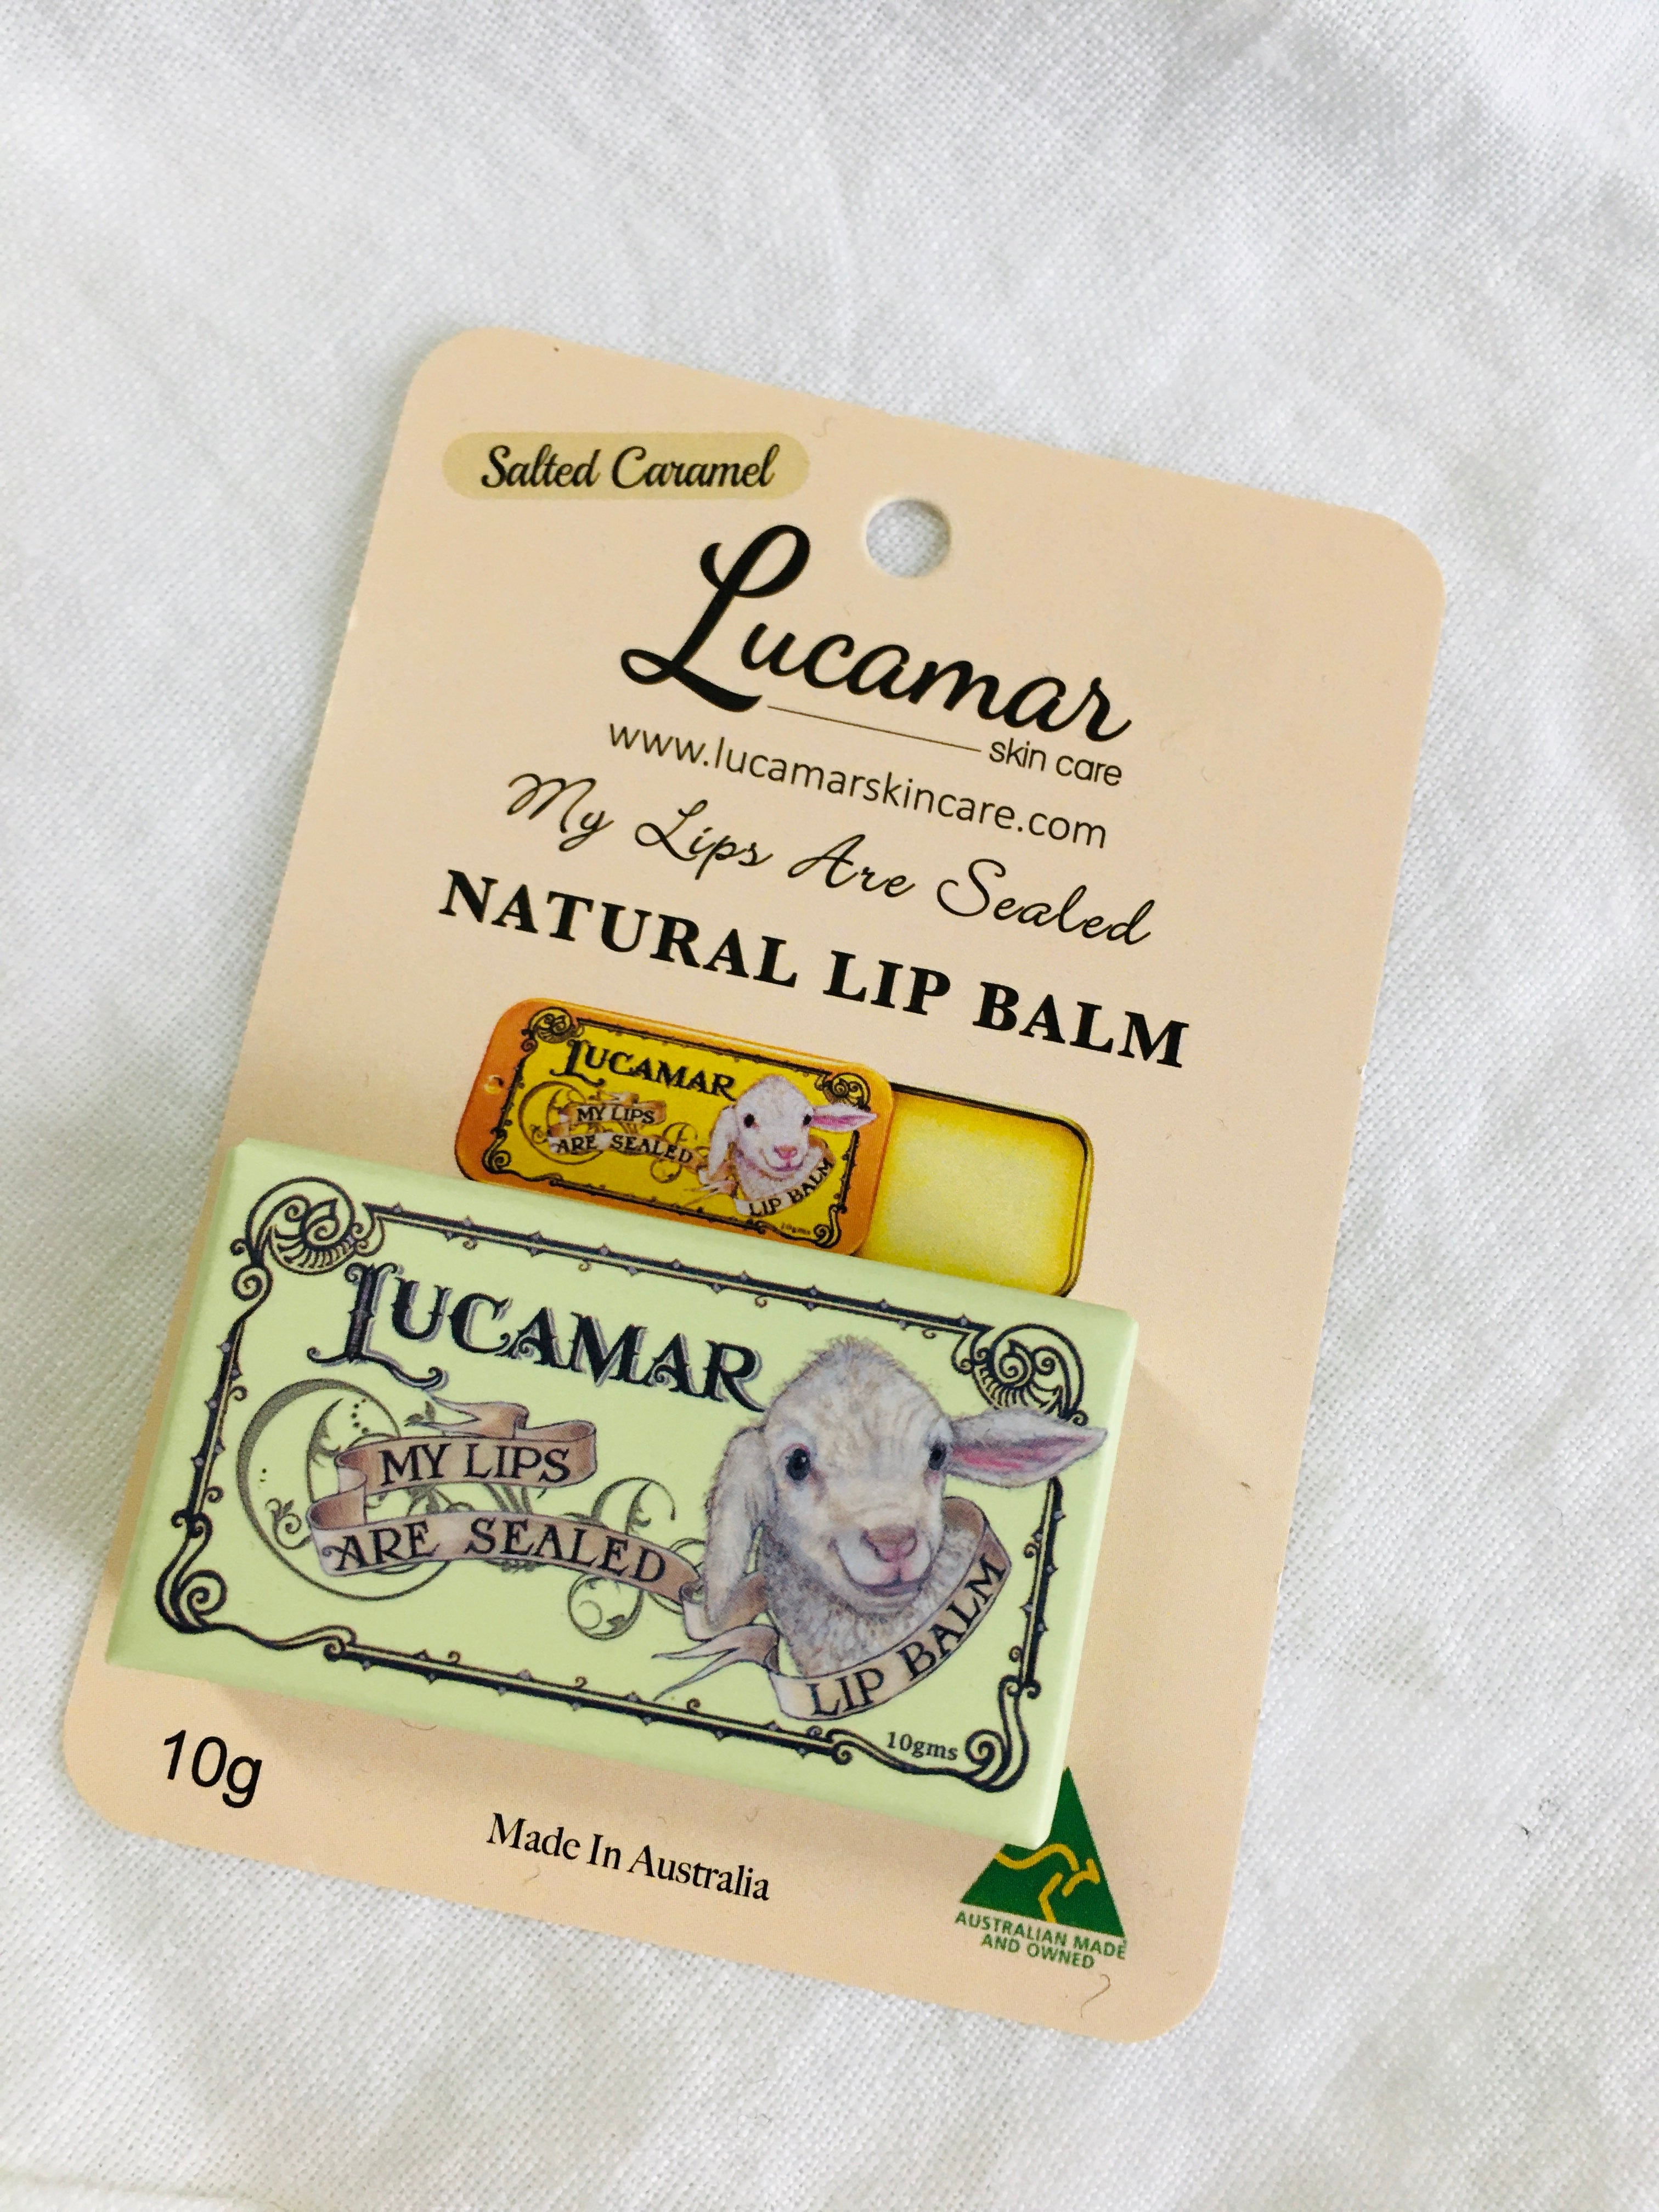 Lucamar - Natural Lip Balms Skin Care Lucamar Skin Care Salted Caramel 